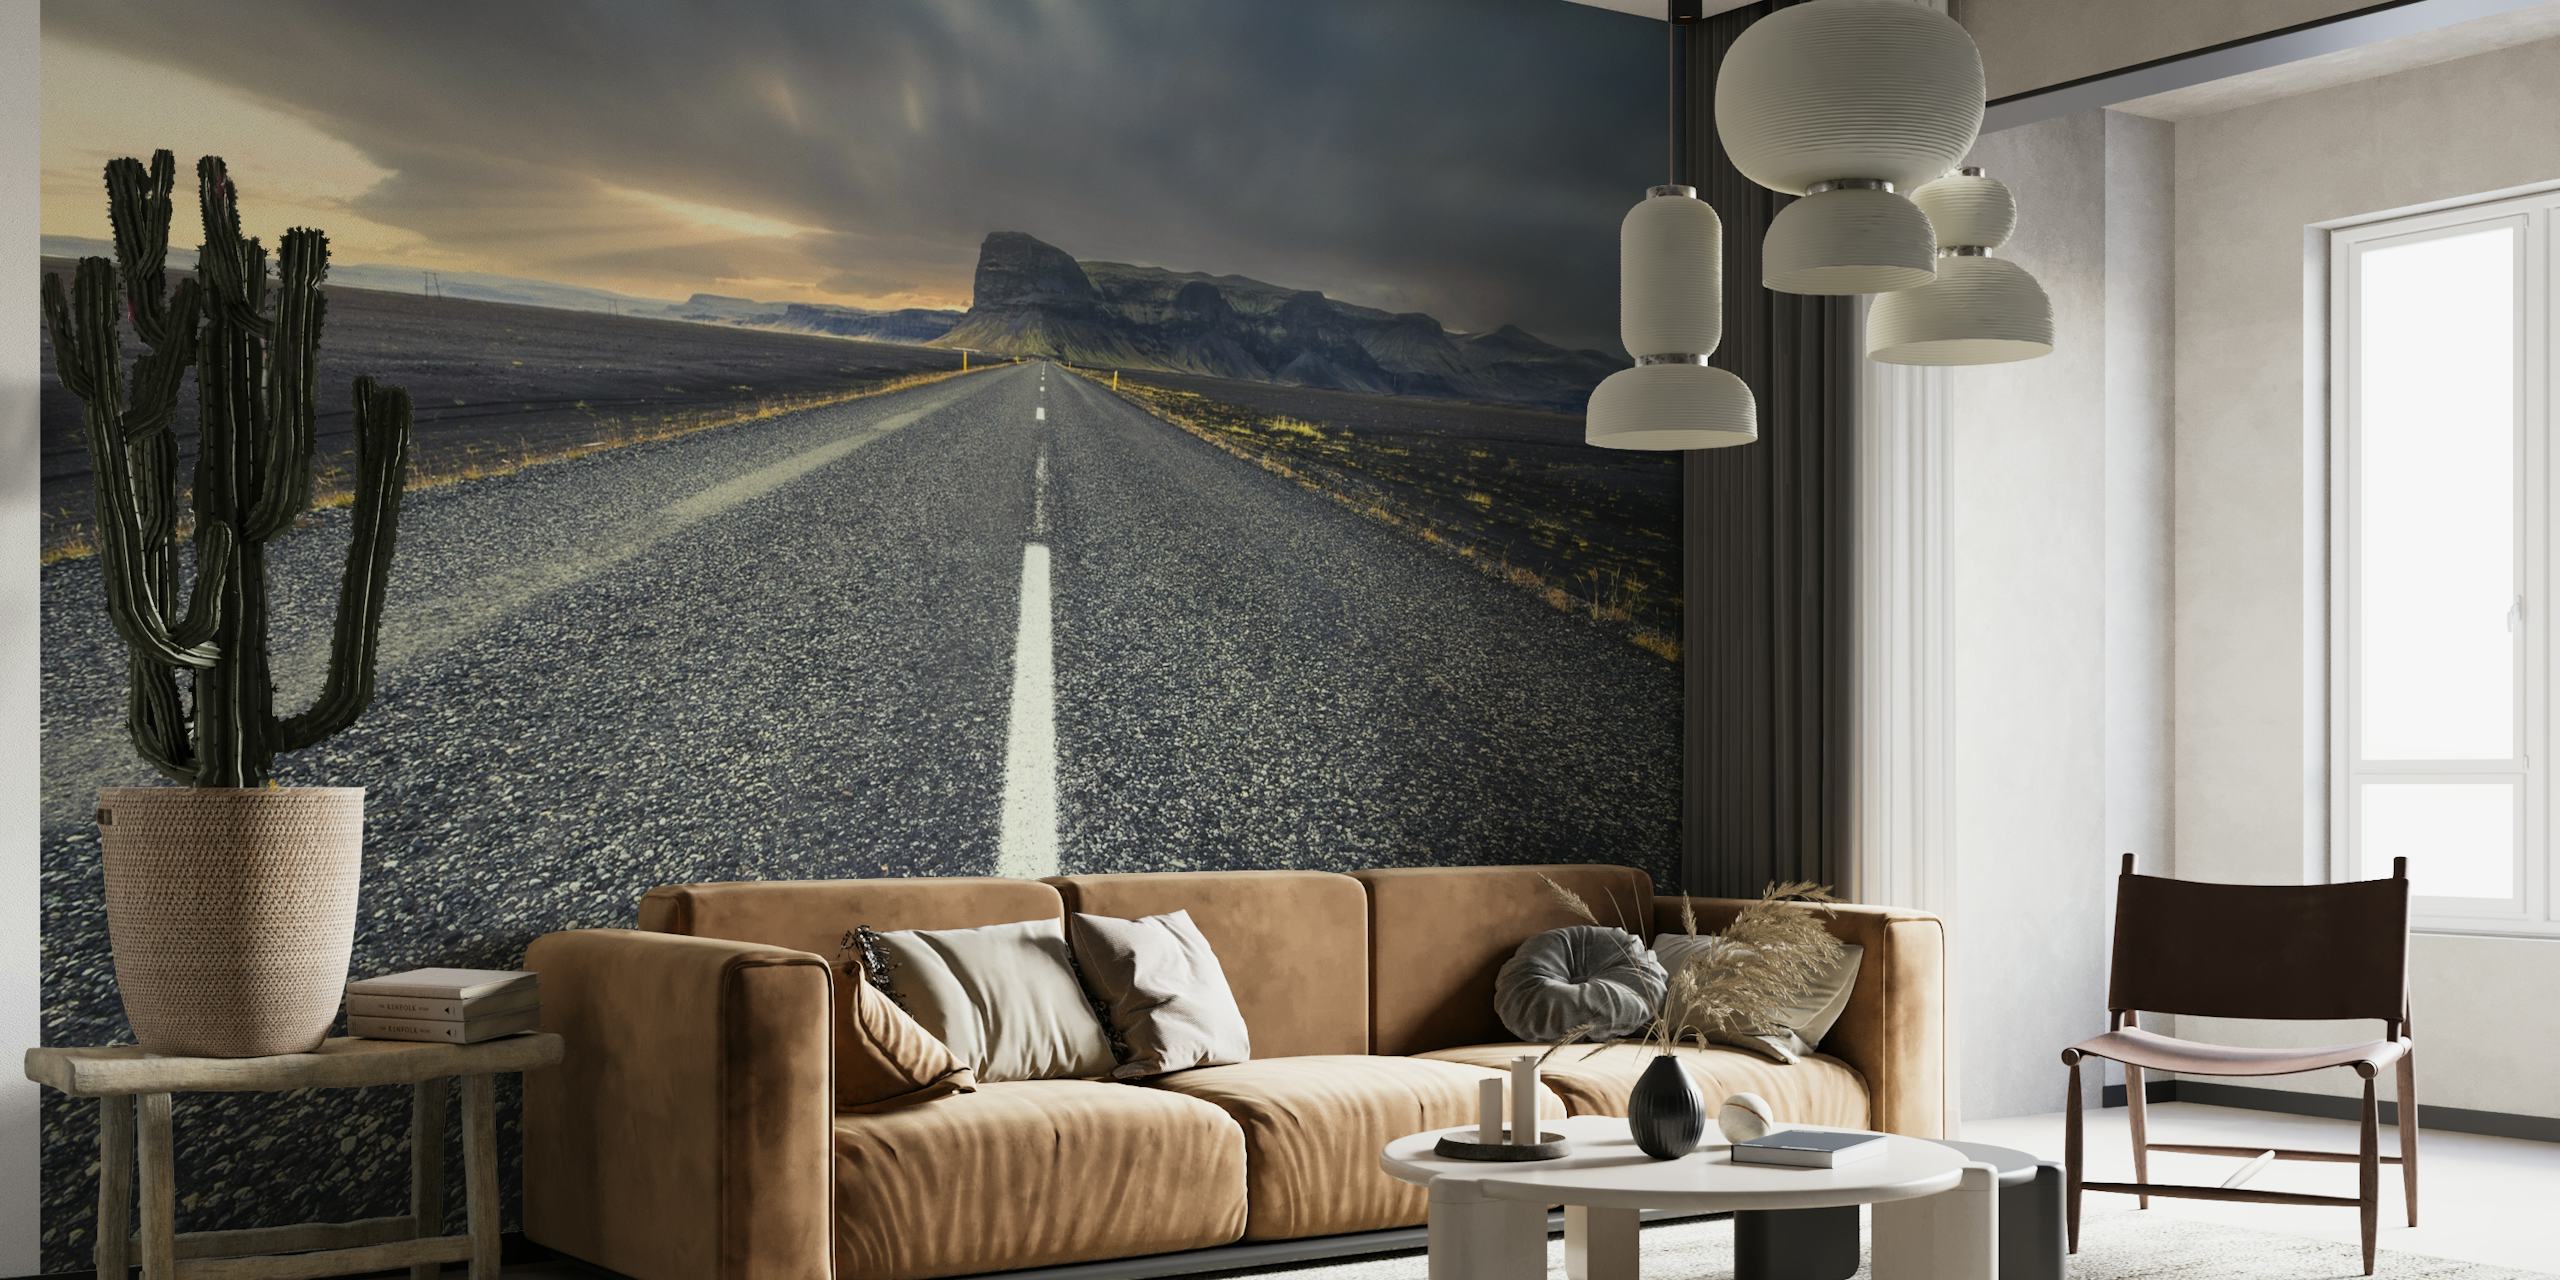 The road wallpaper